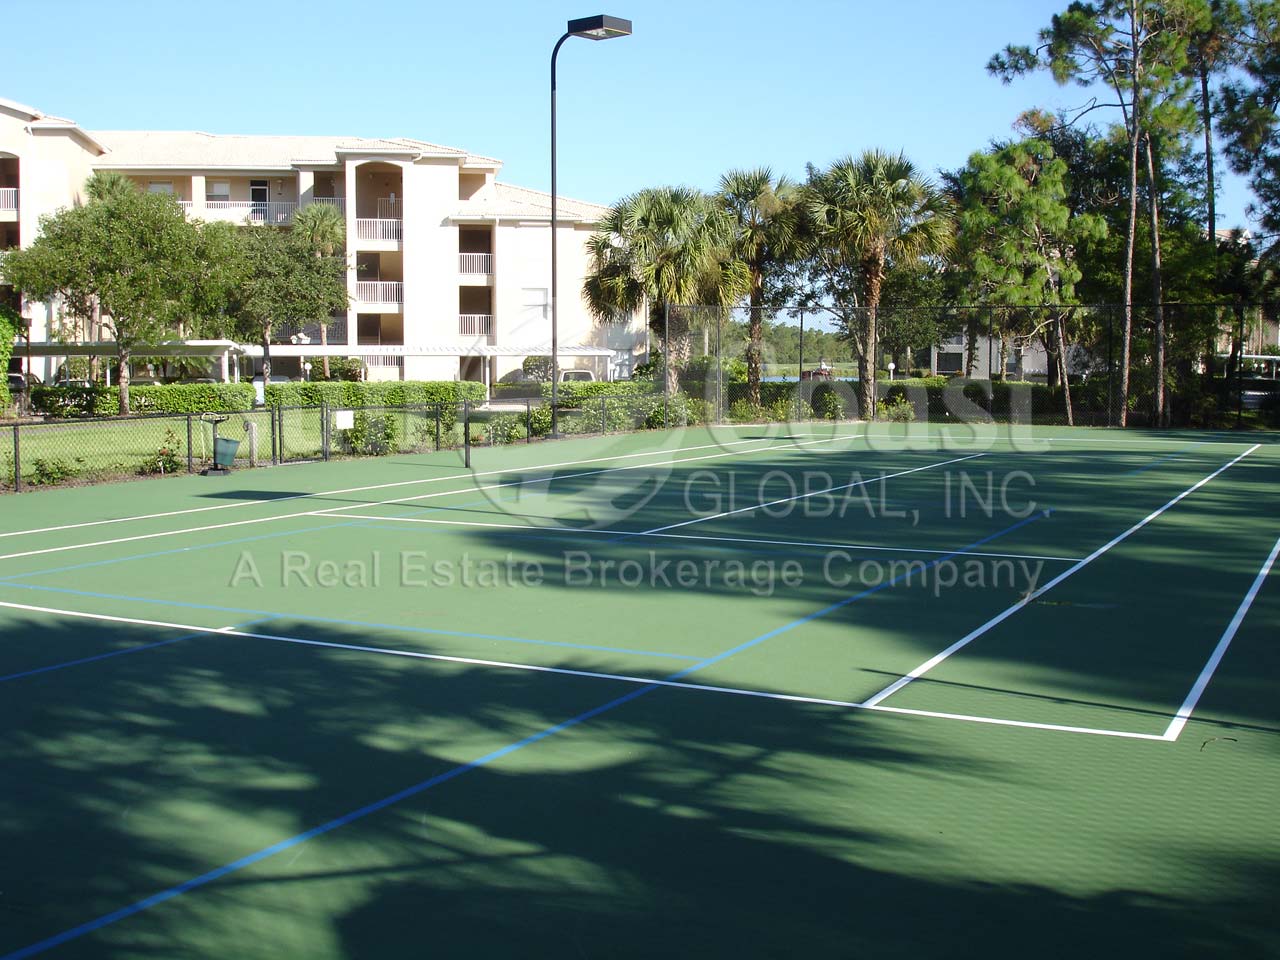 Arbor Lakes tennis courts